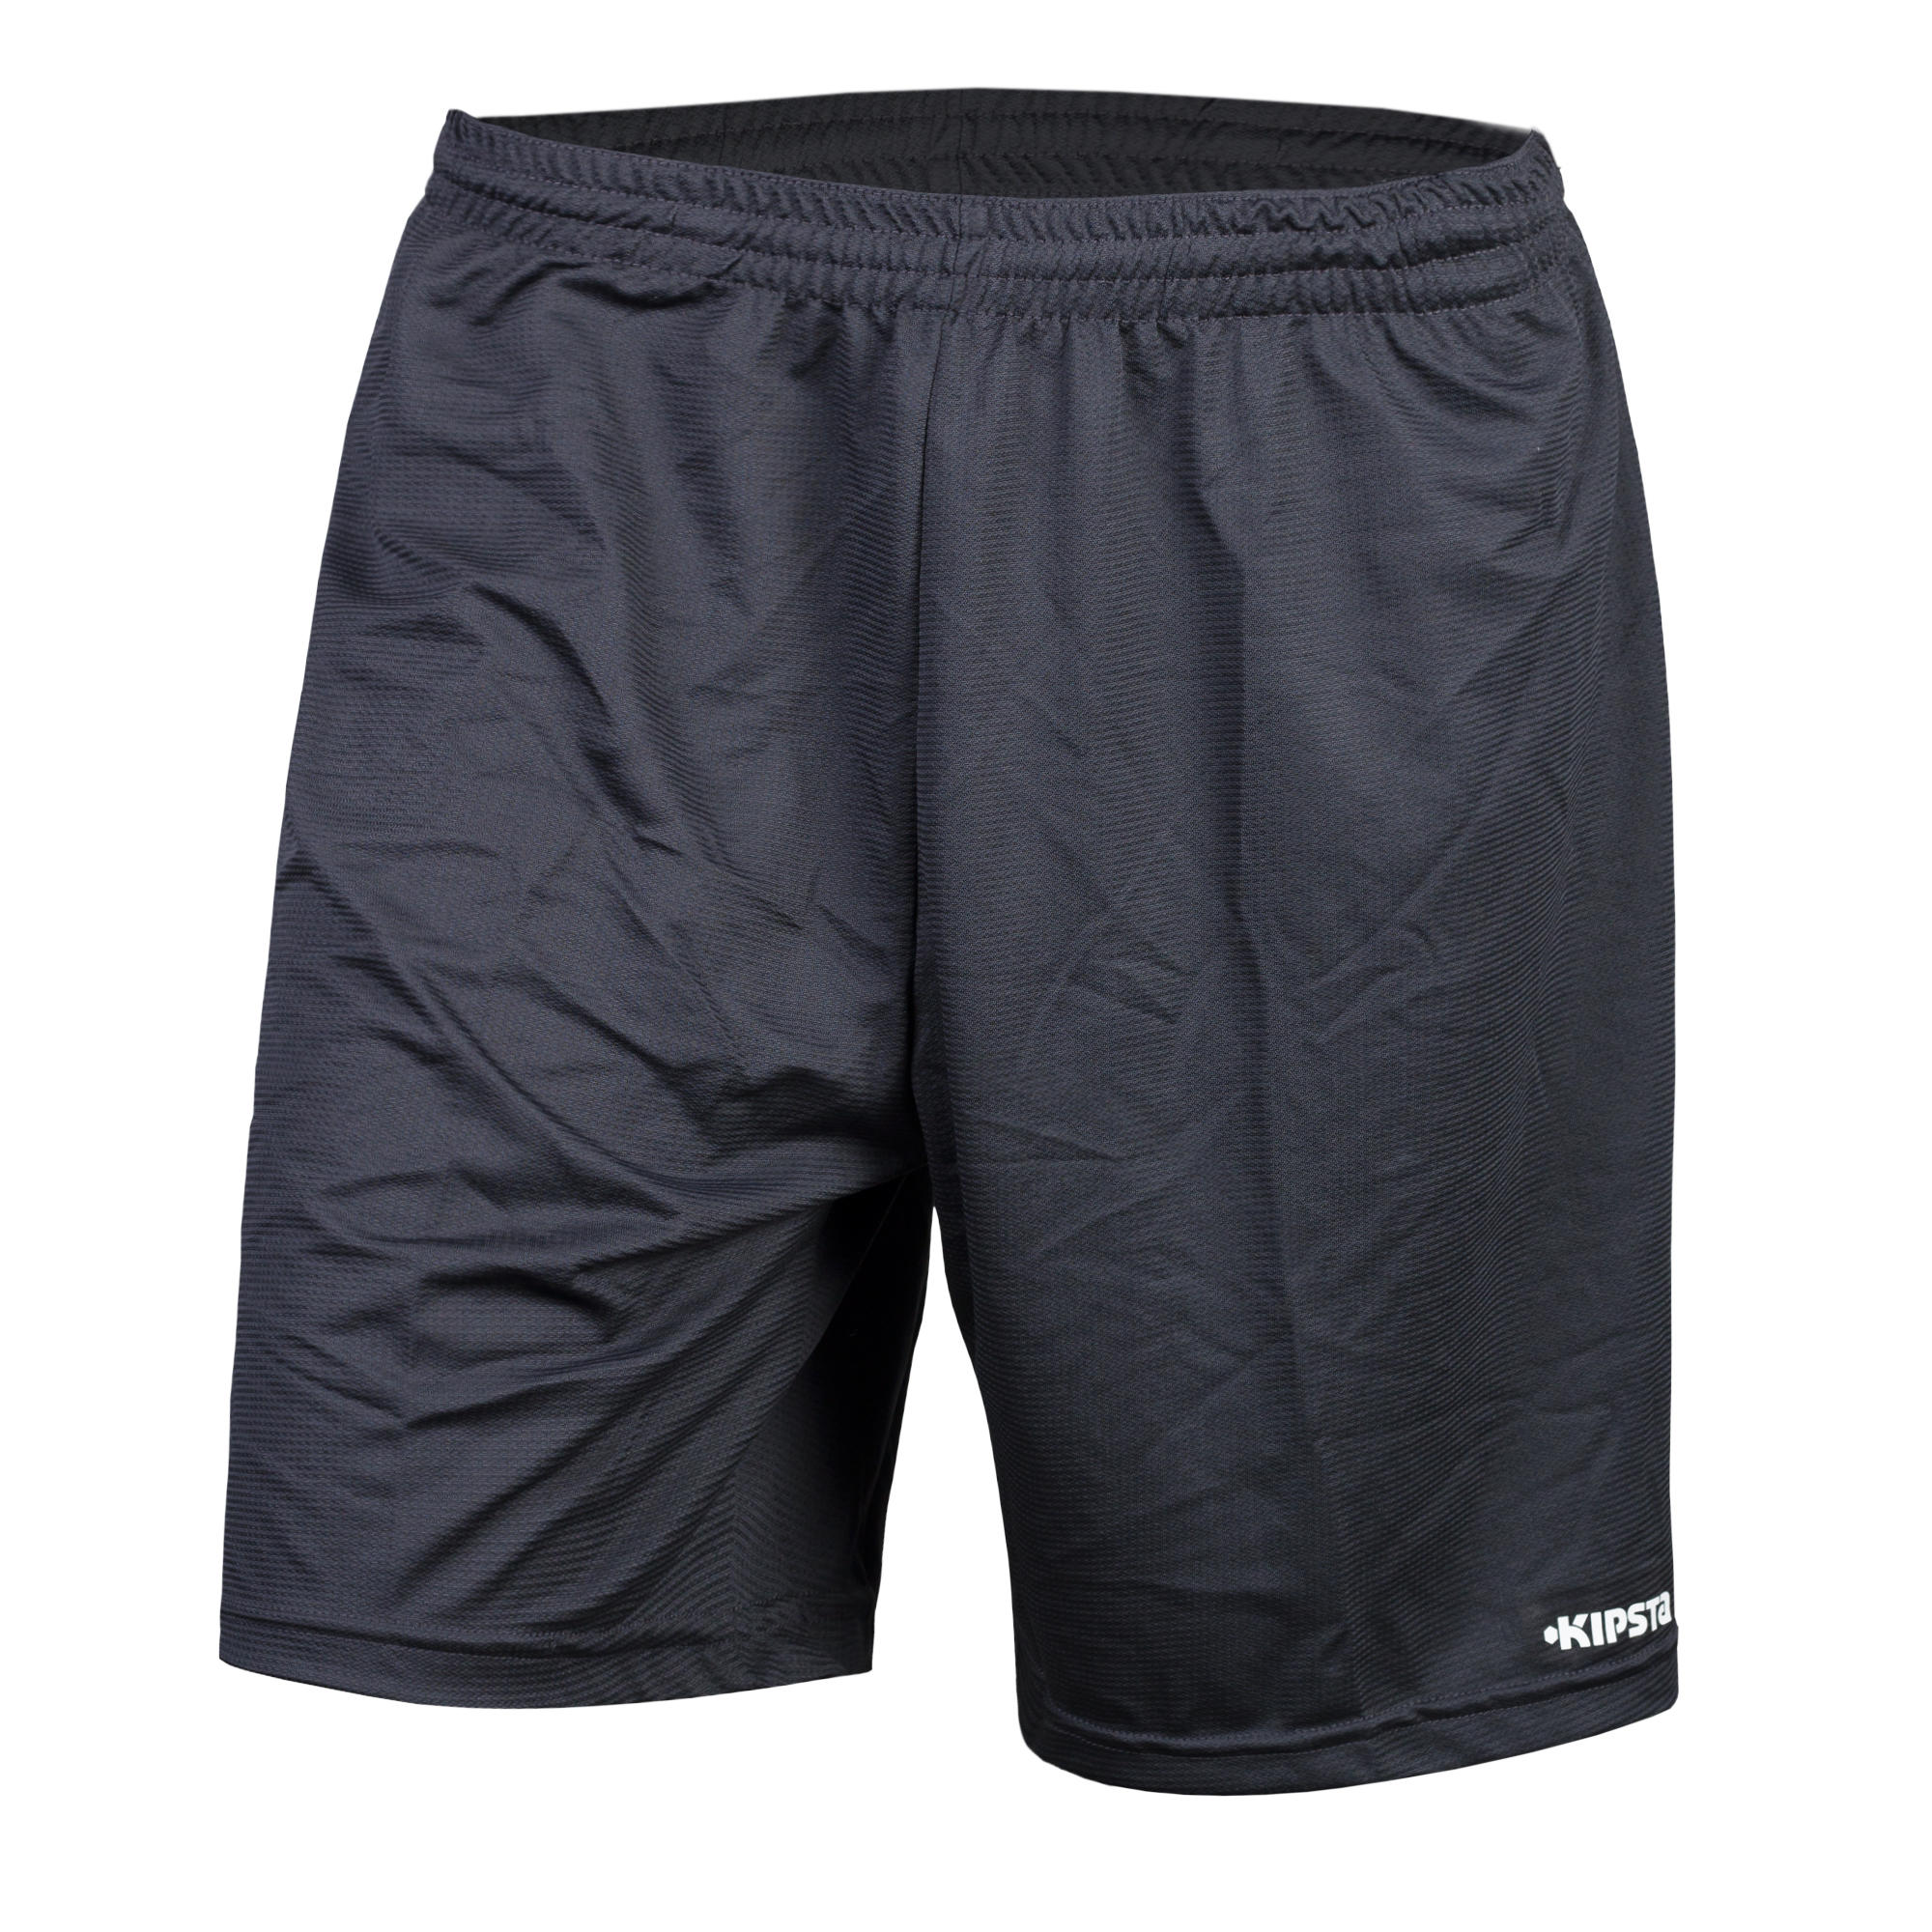 decathlon football shorts